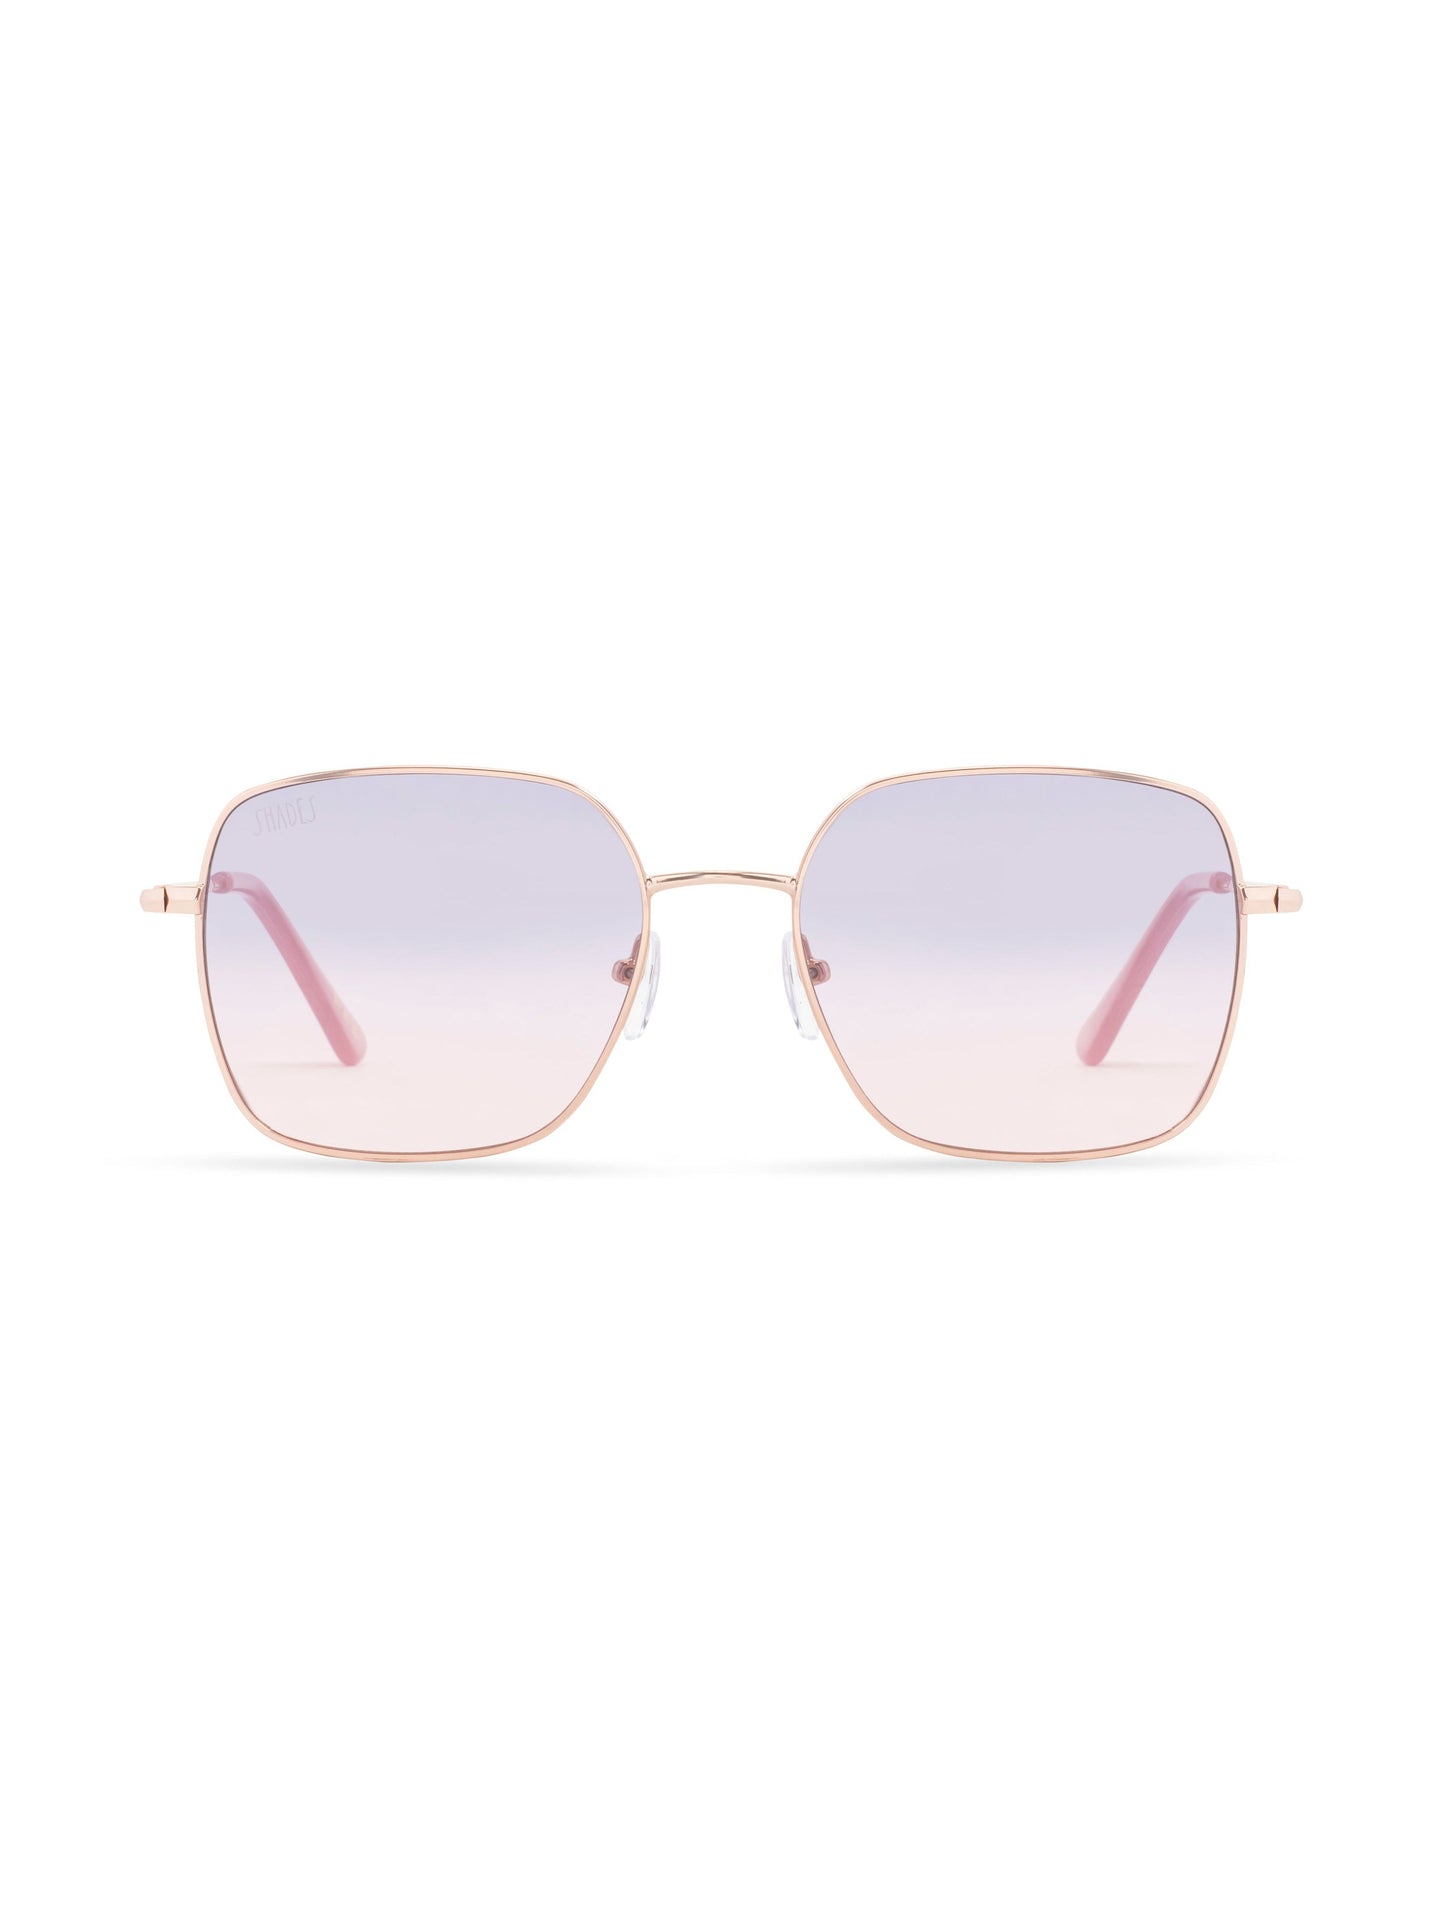 DREW Premium Sunglasses with "SHADES" Signature Font - Rae Dunn Wear